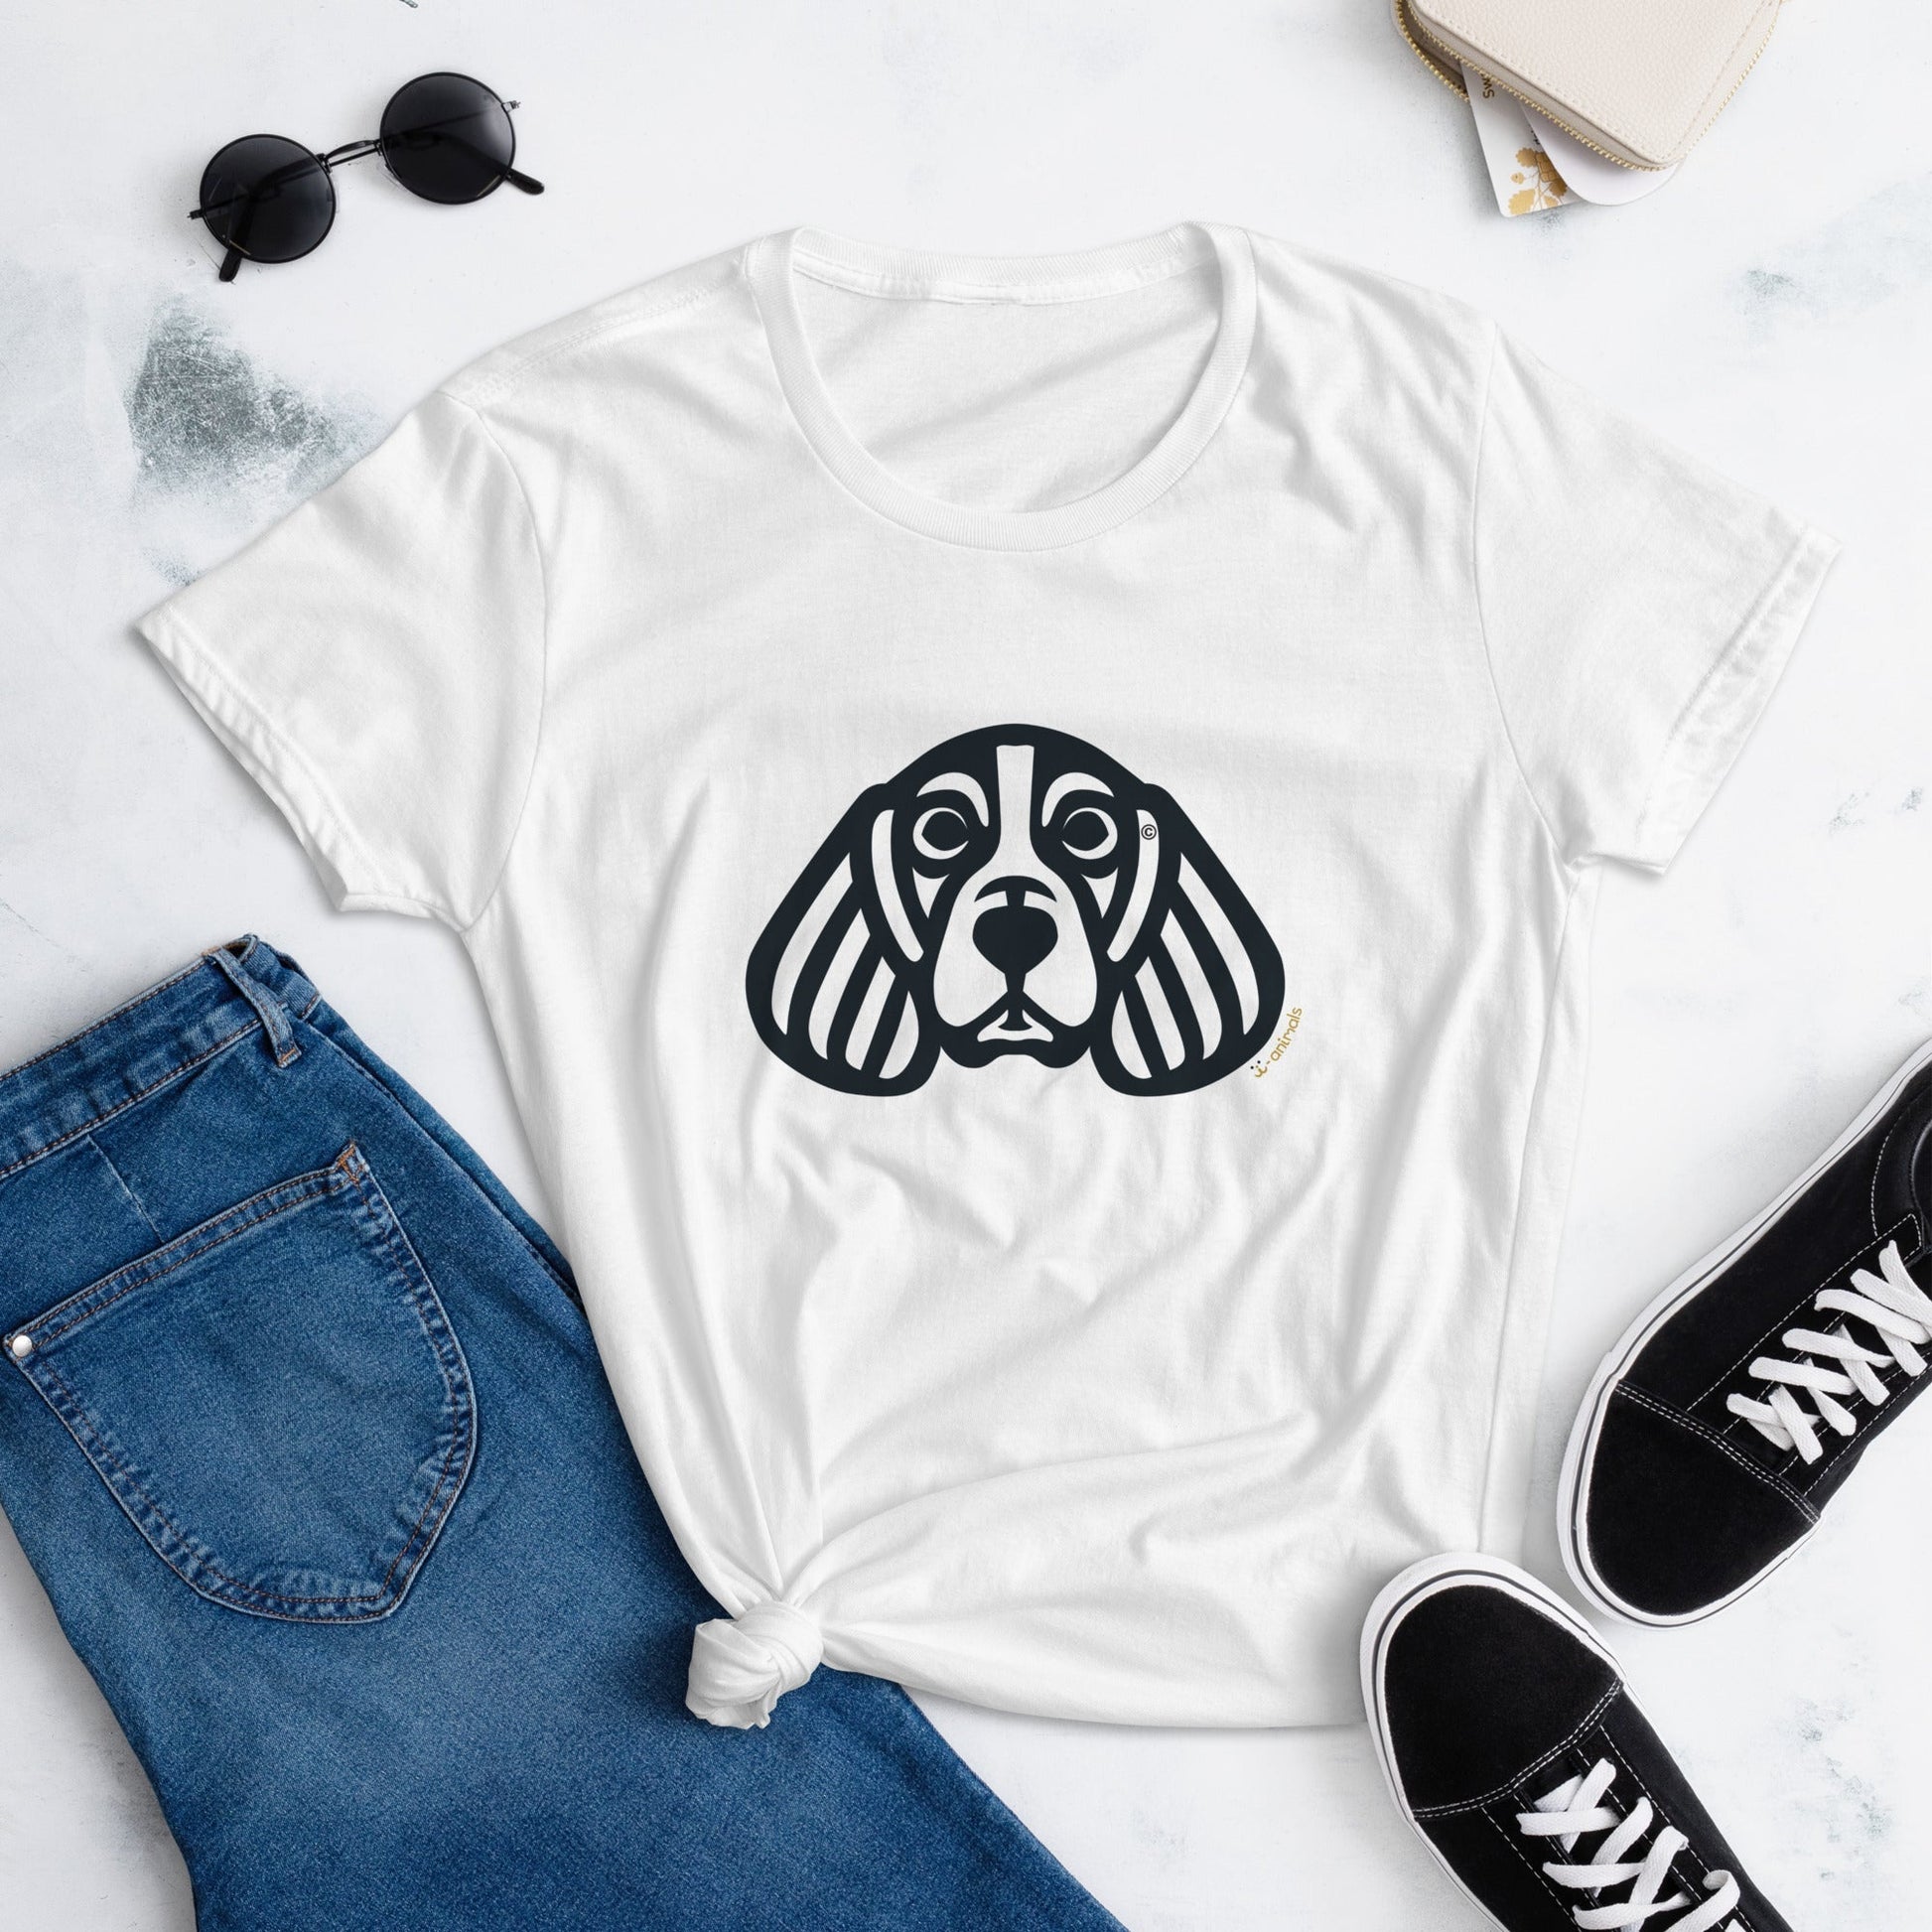 Camiseta feminina de manga curta - Beagle - Tribal - Cores Claras i-animals